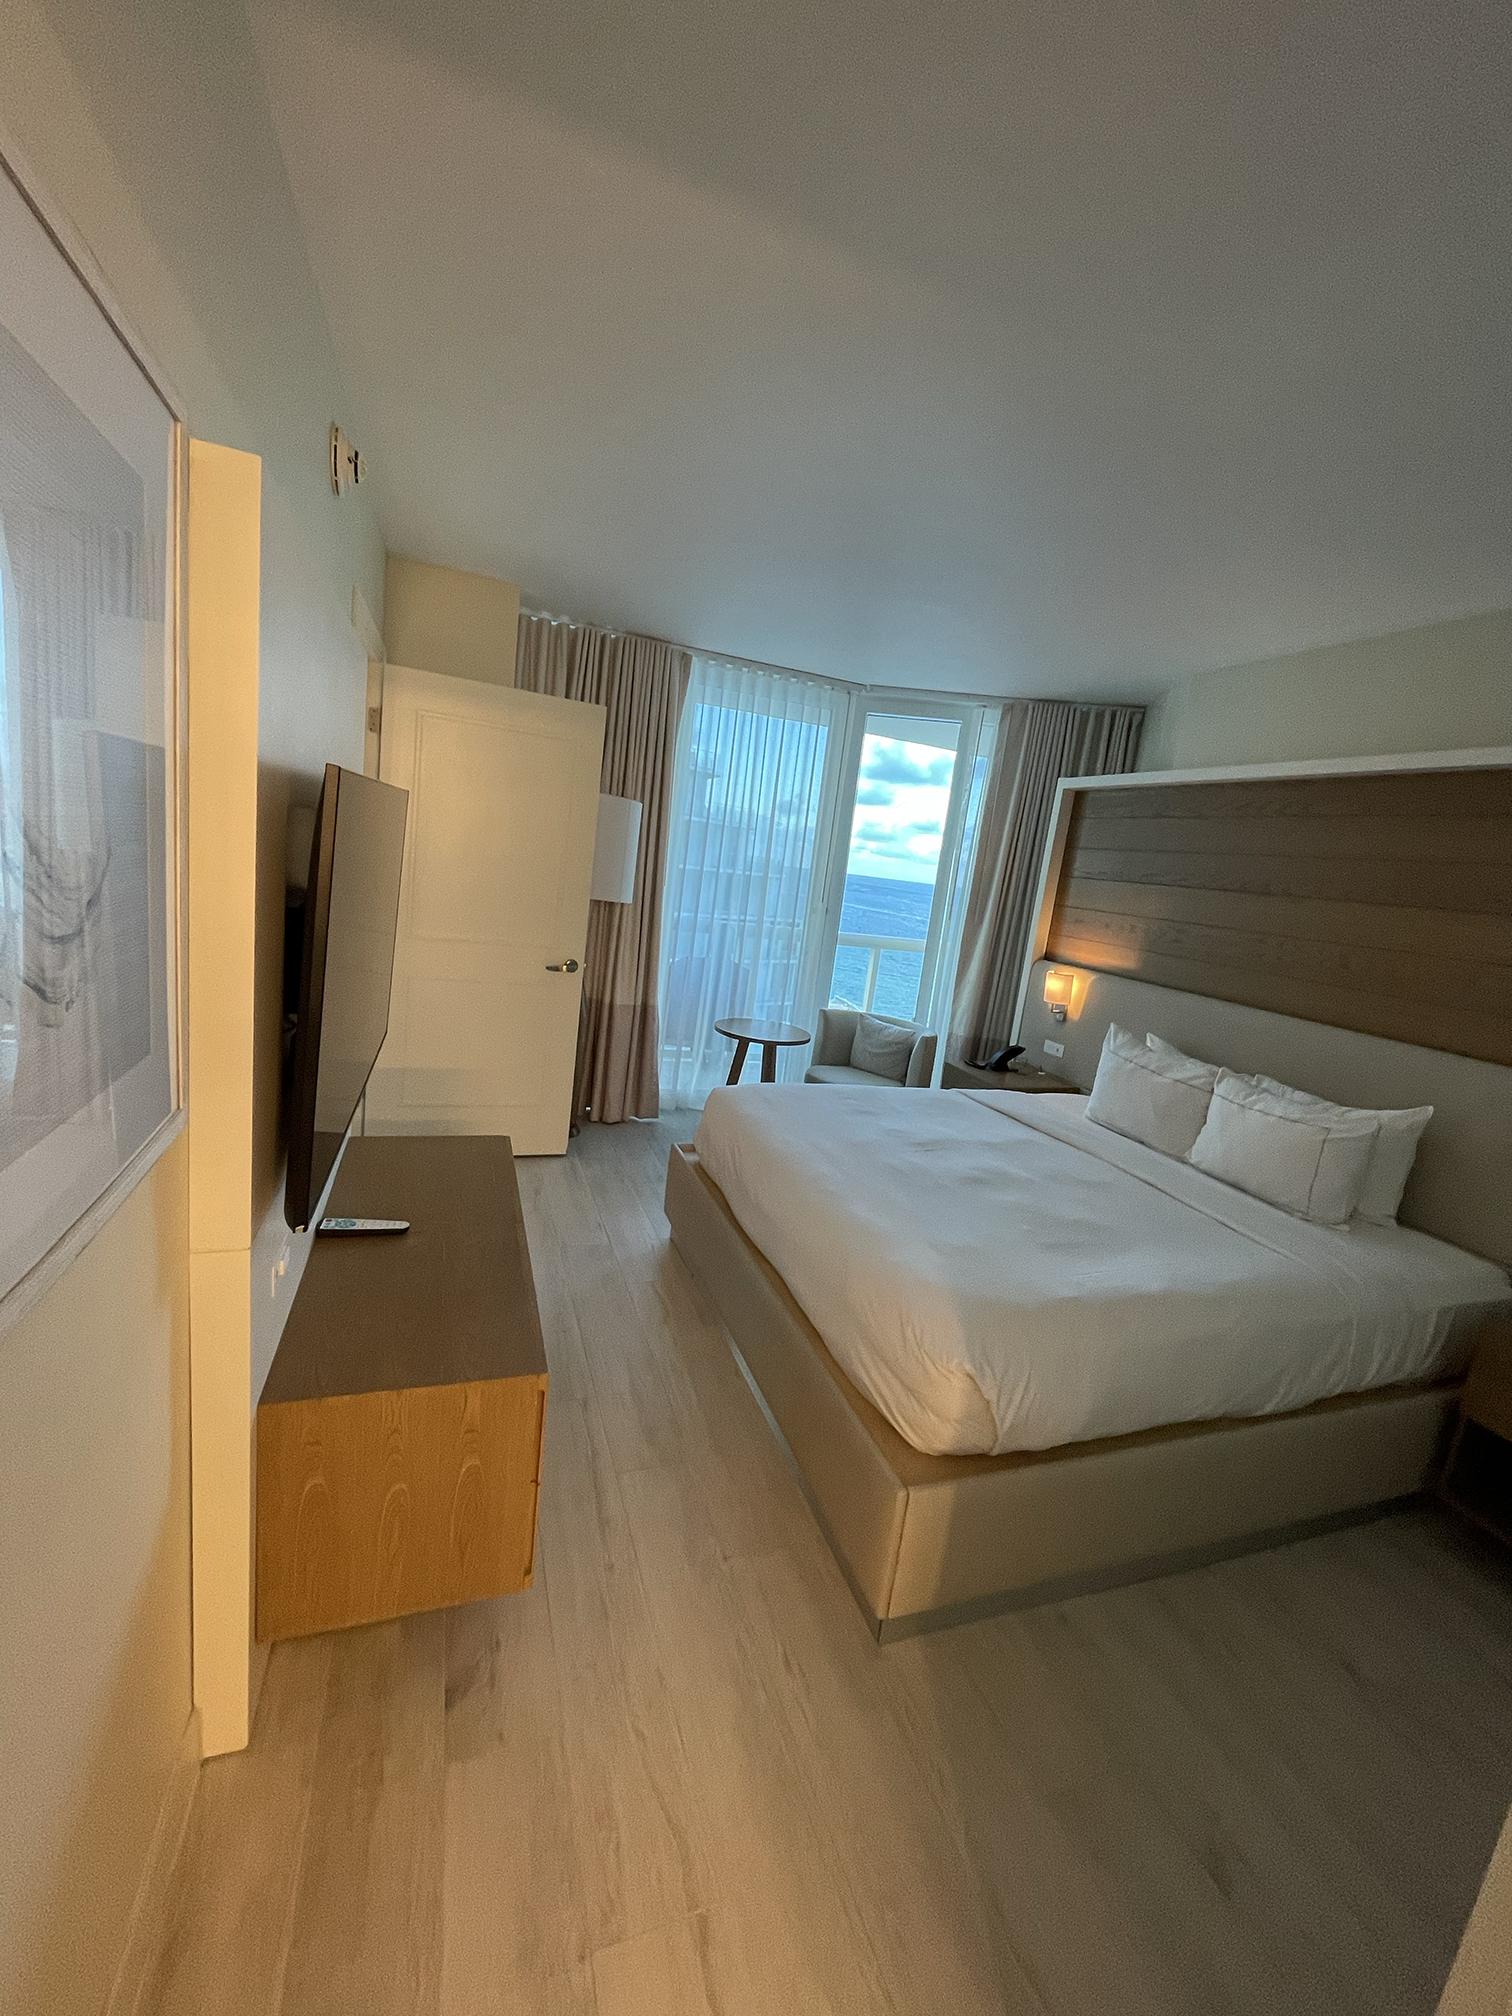 Room at Hilton Fort Lauderdale